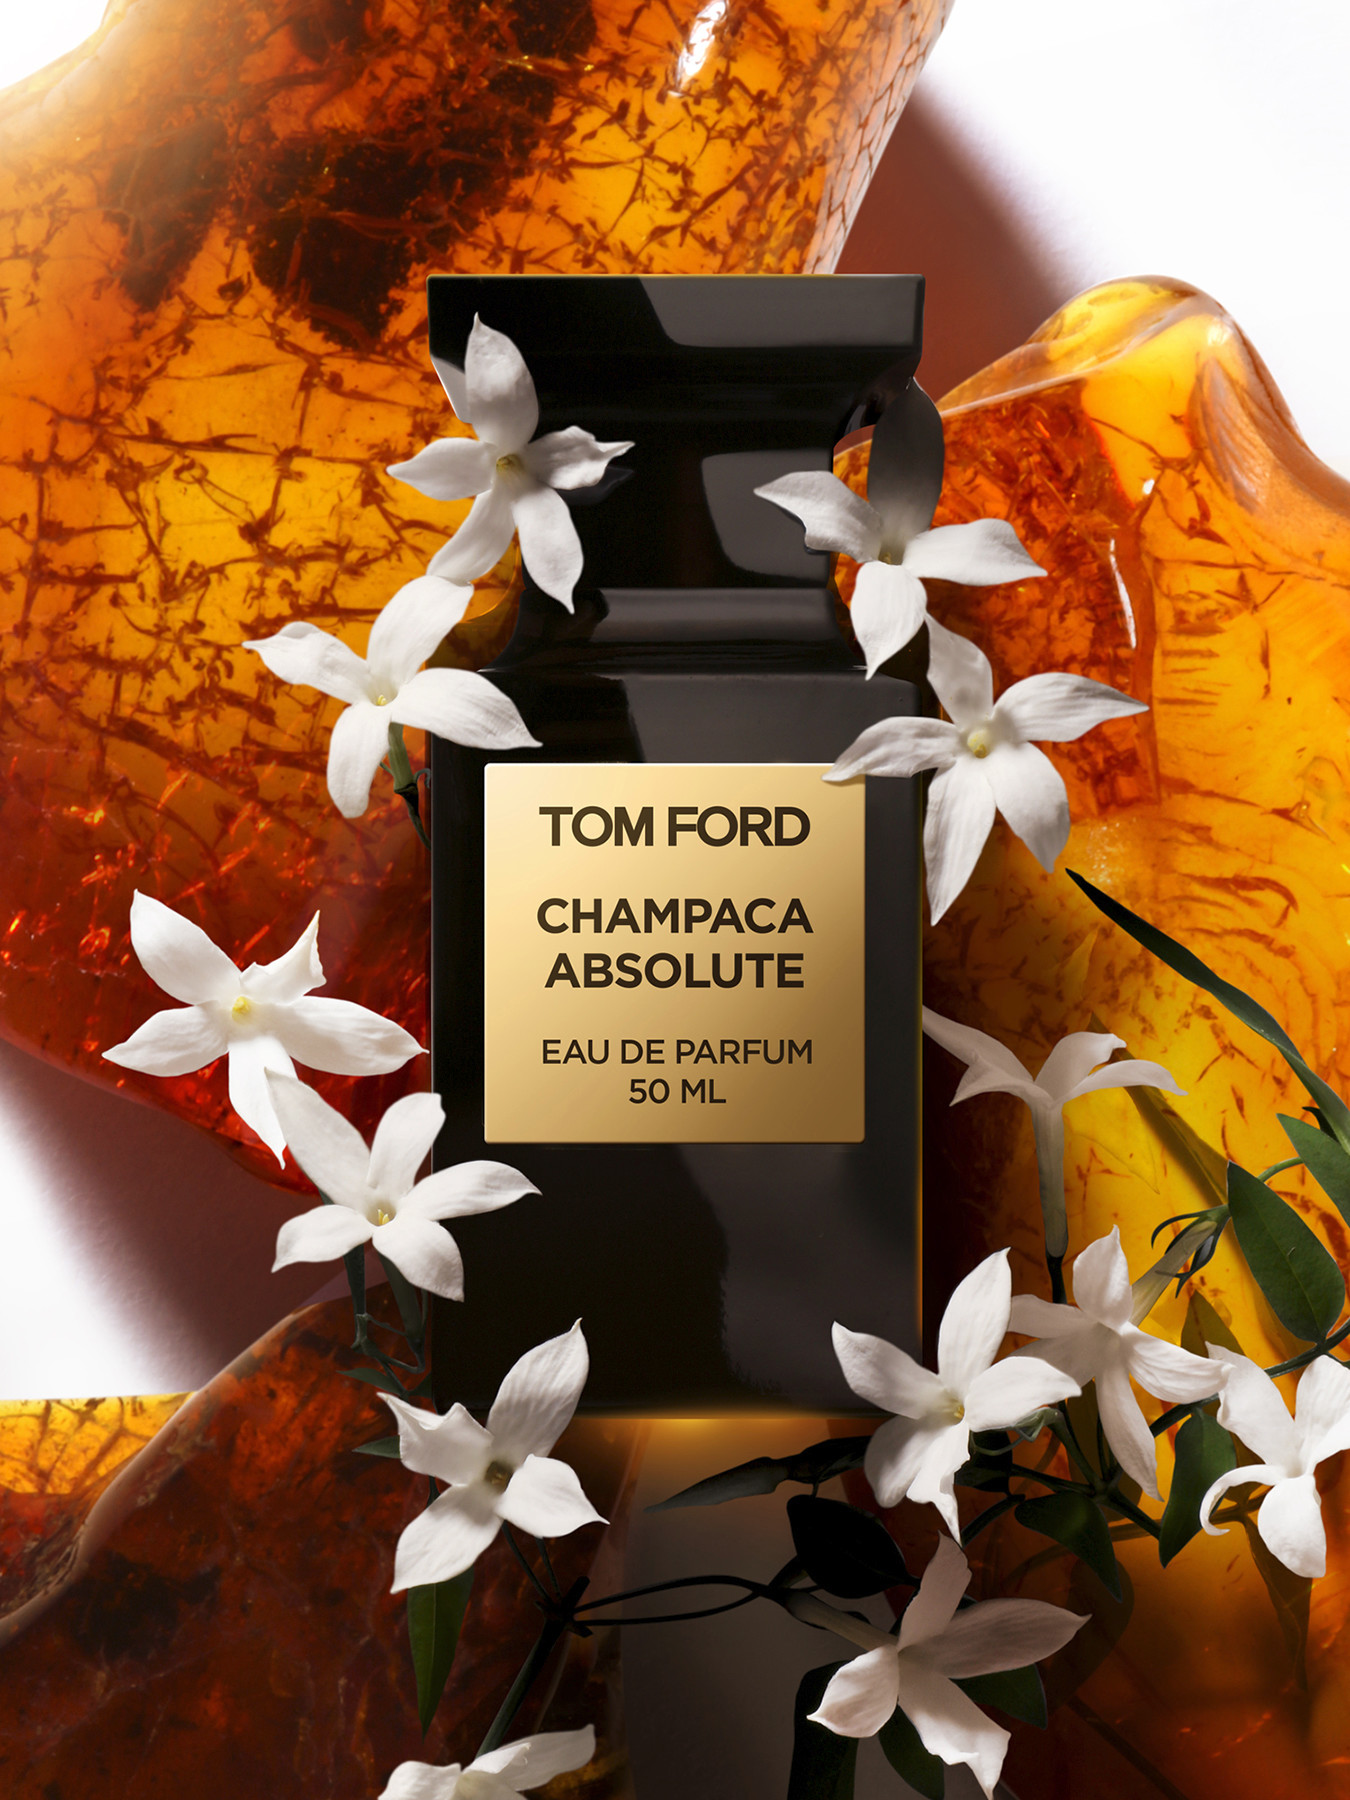 Tom Ford Champaca Absolute Eau de Parfum 50 ml | Fenwick